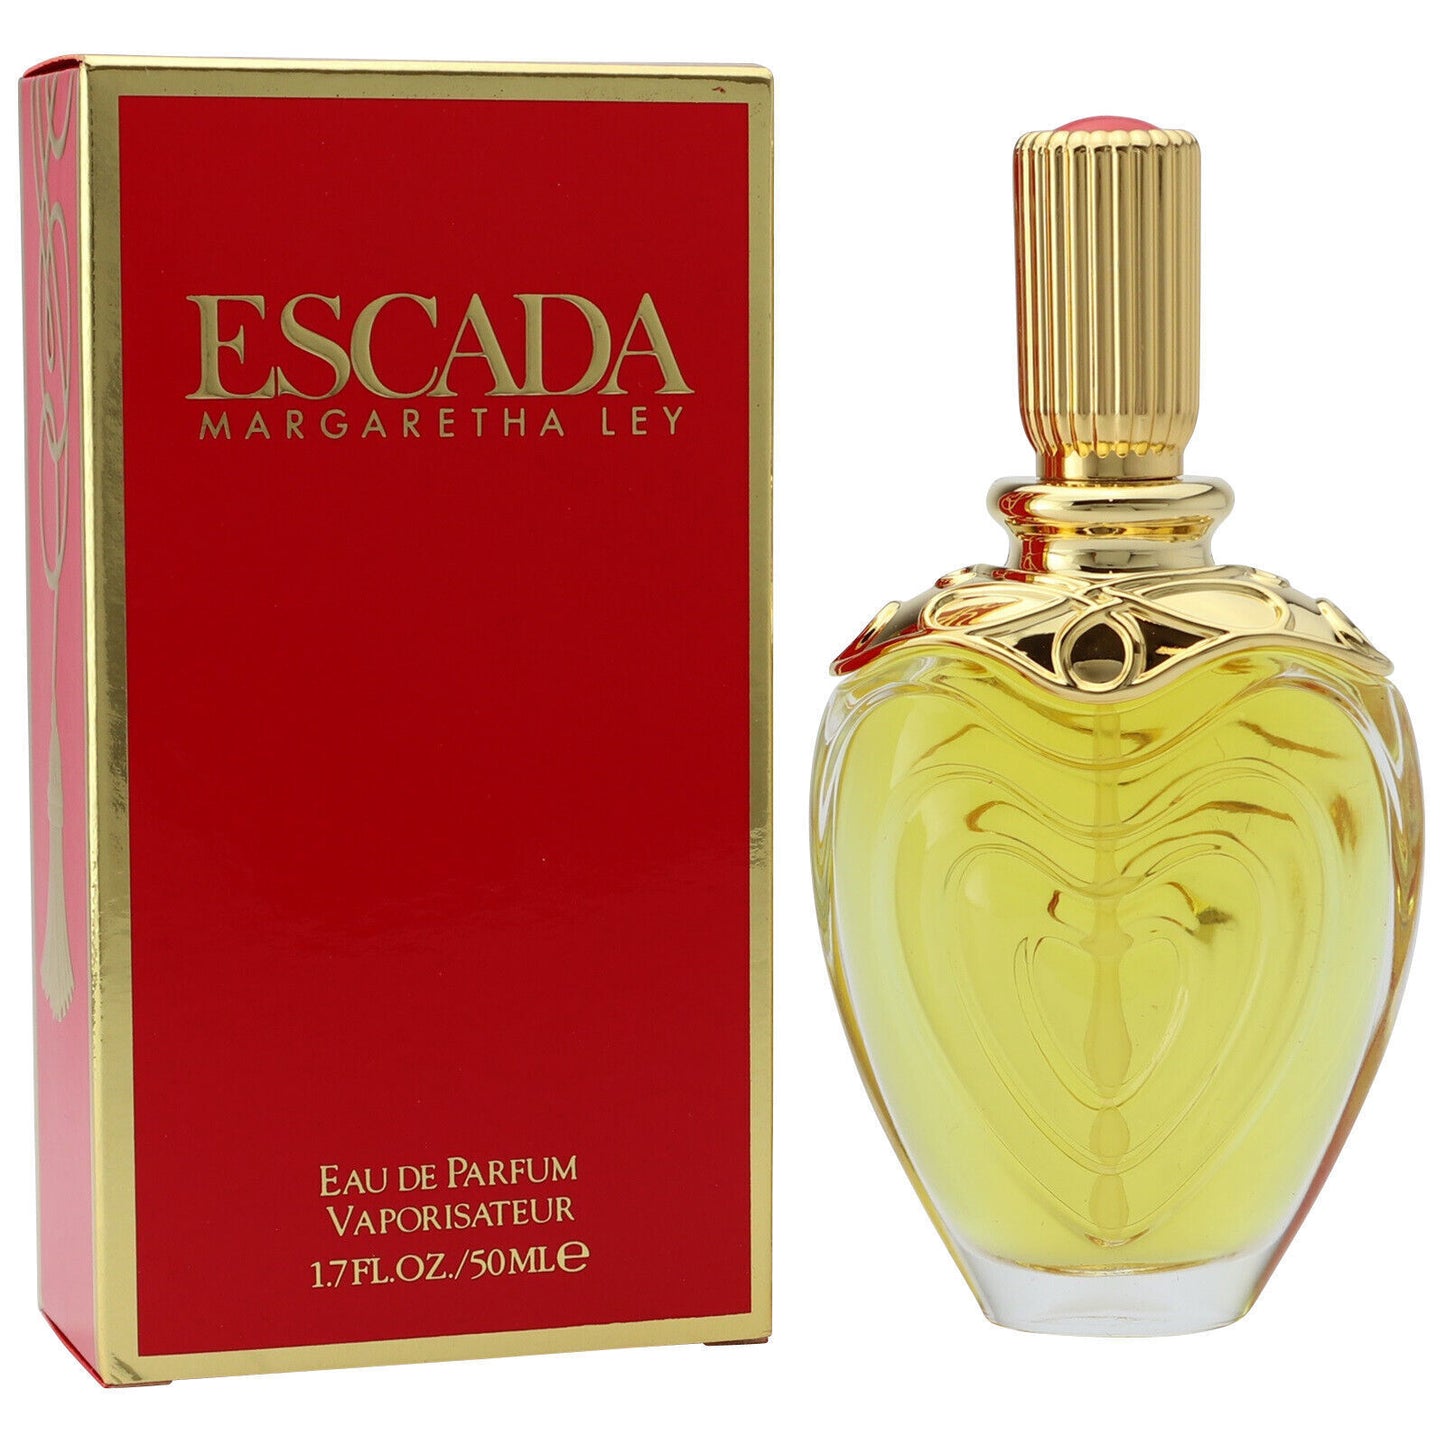 Escada ESCADA classic eau de parfum